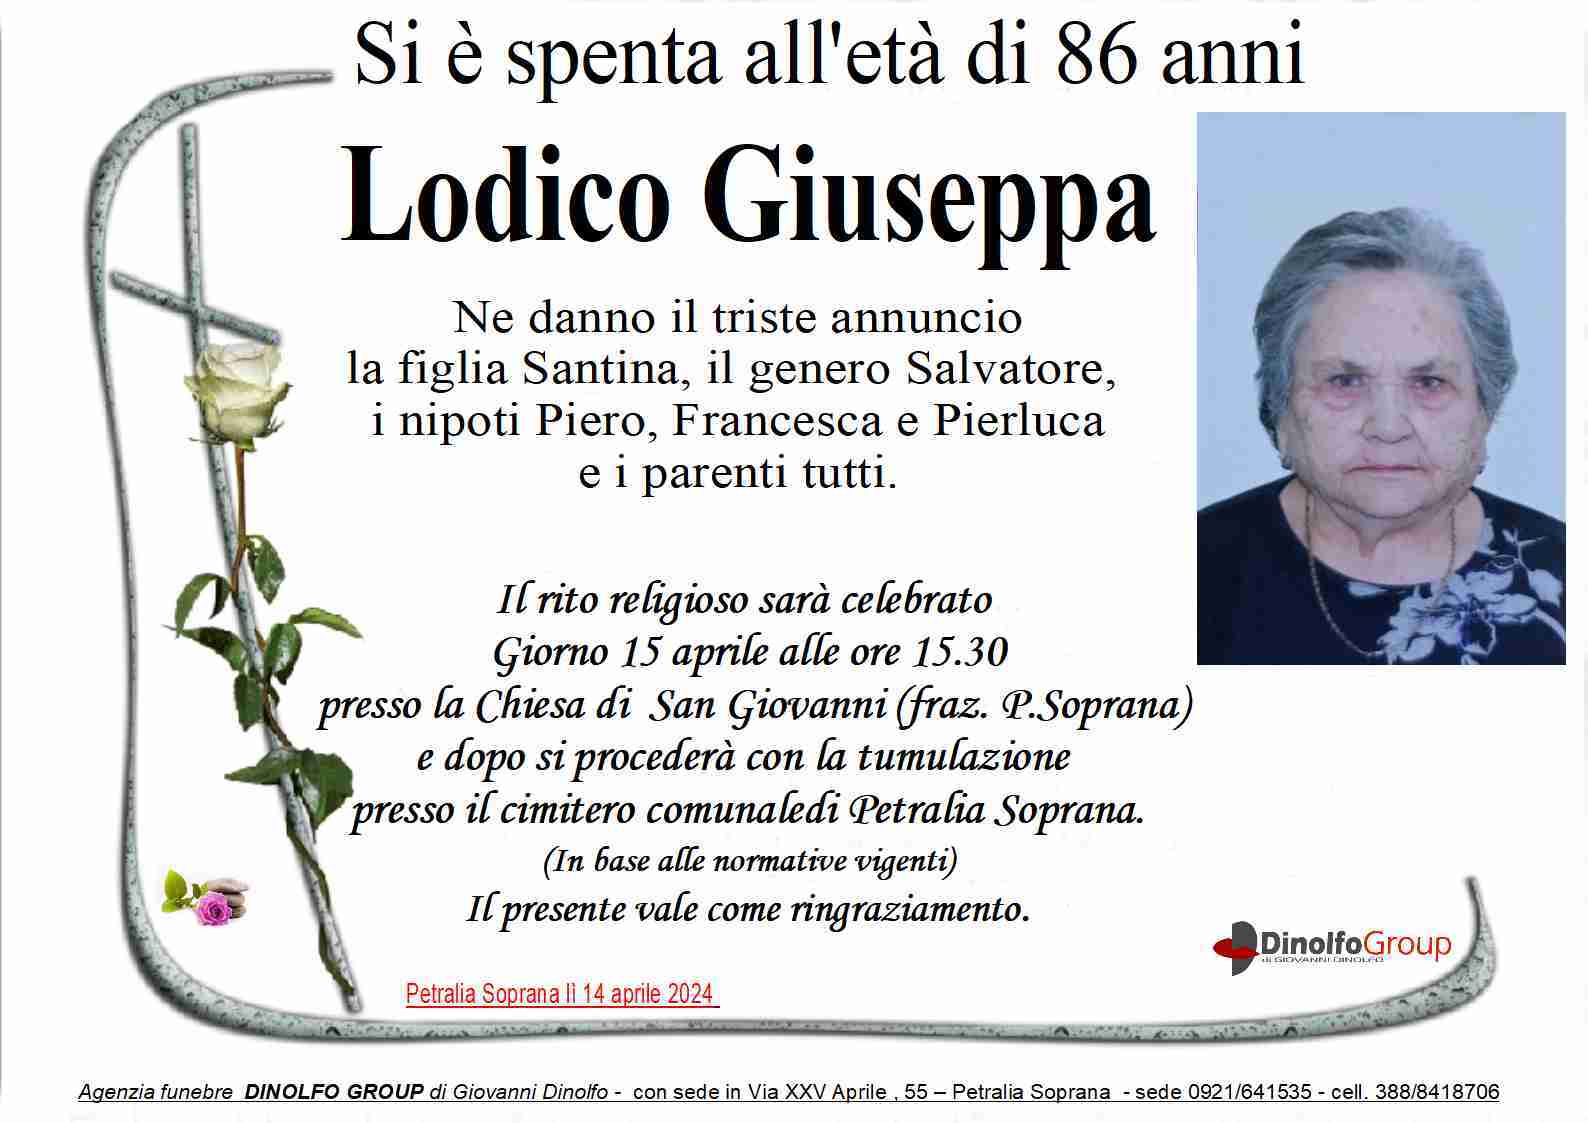 Giuseppa Lodico